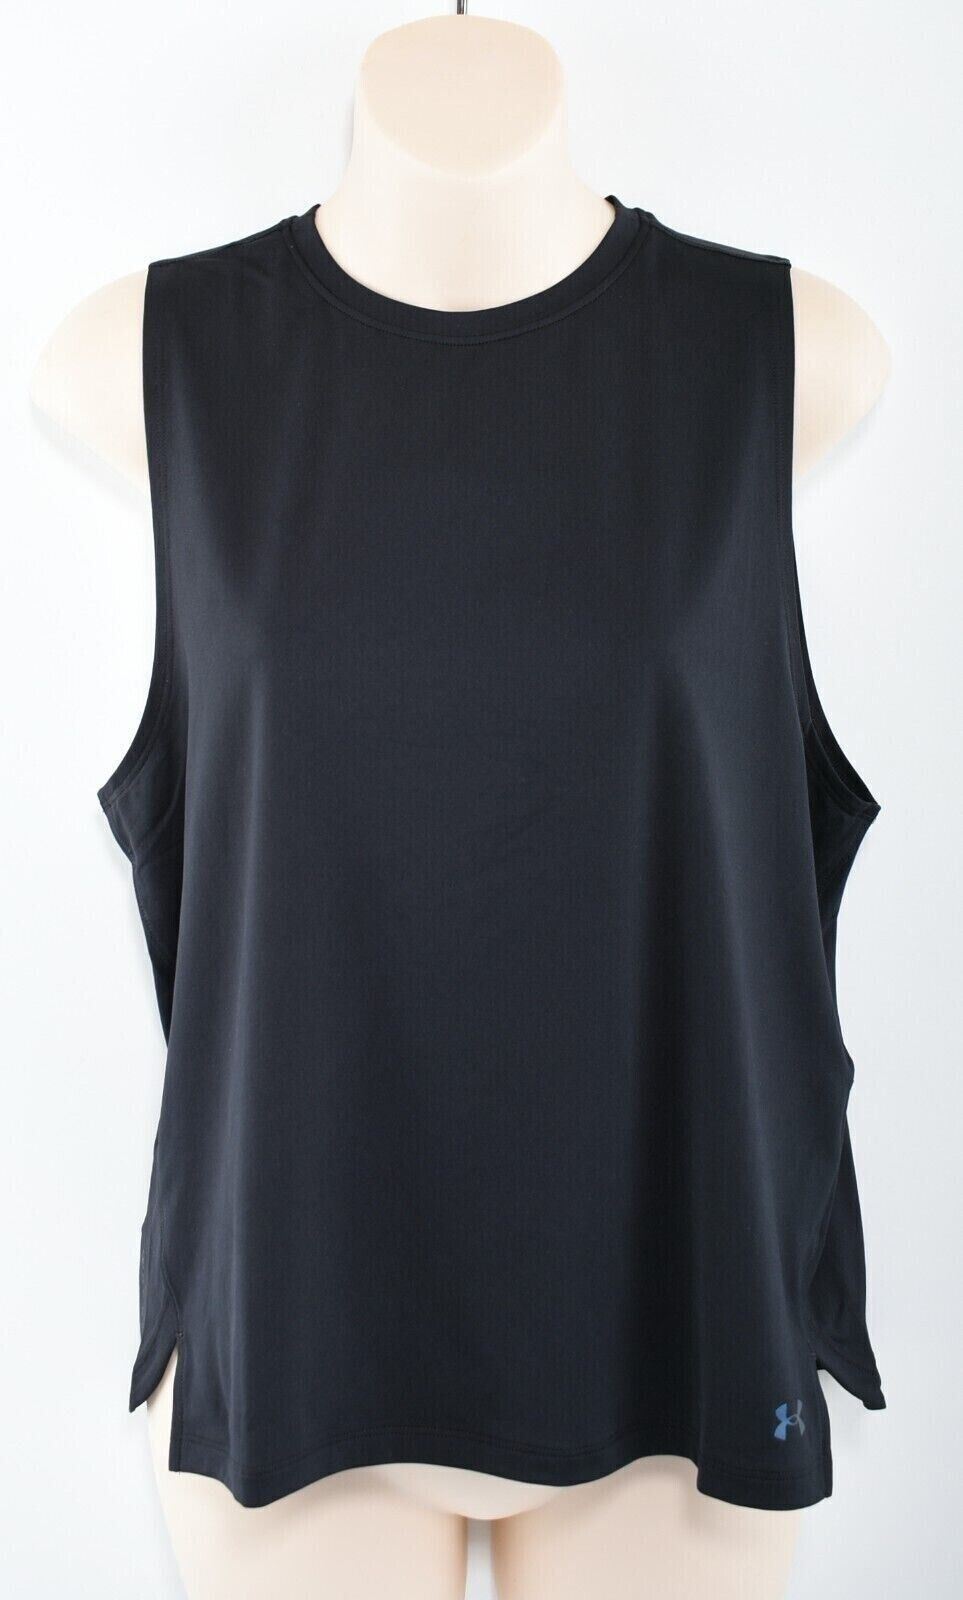 UNDER ARMOUR Activewear Women's RUSH TANK Top, Black, size L (UK 14)